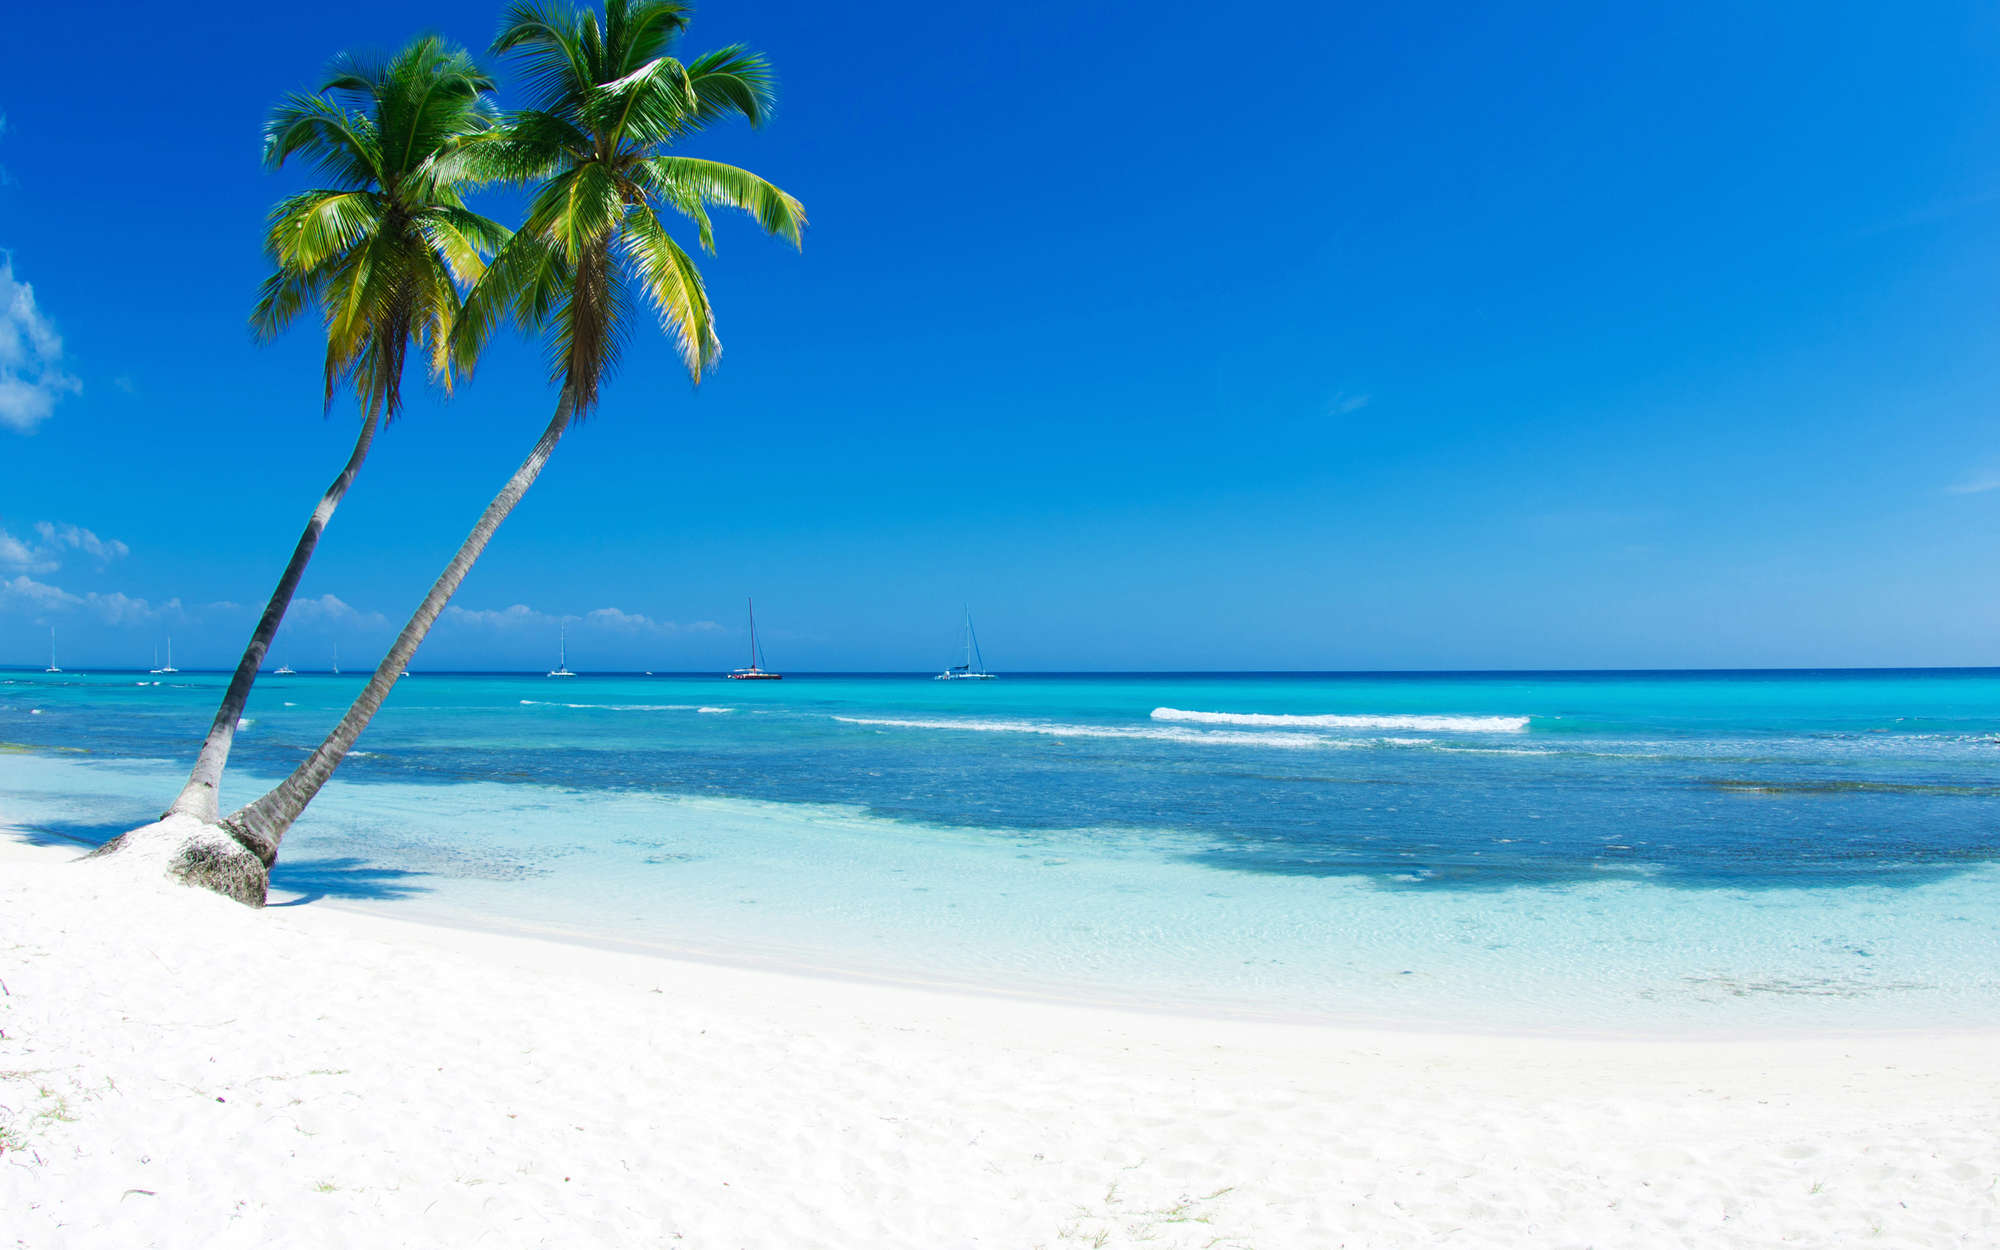             Fotomurali spiaggia sabbiosa in bianco con palma - Pile liscio premium
        